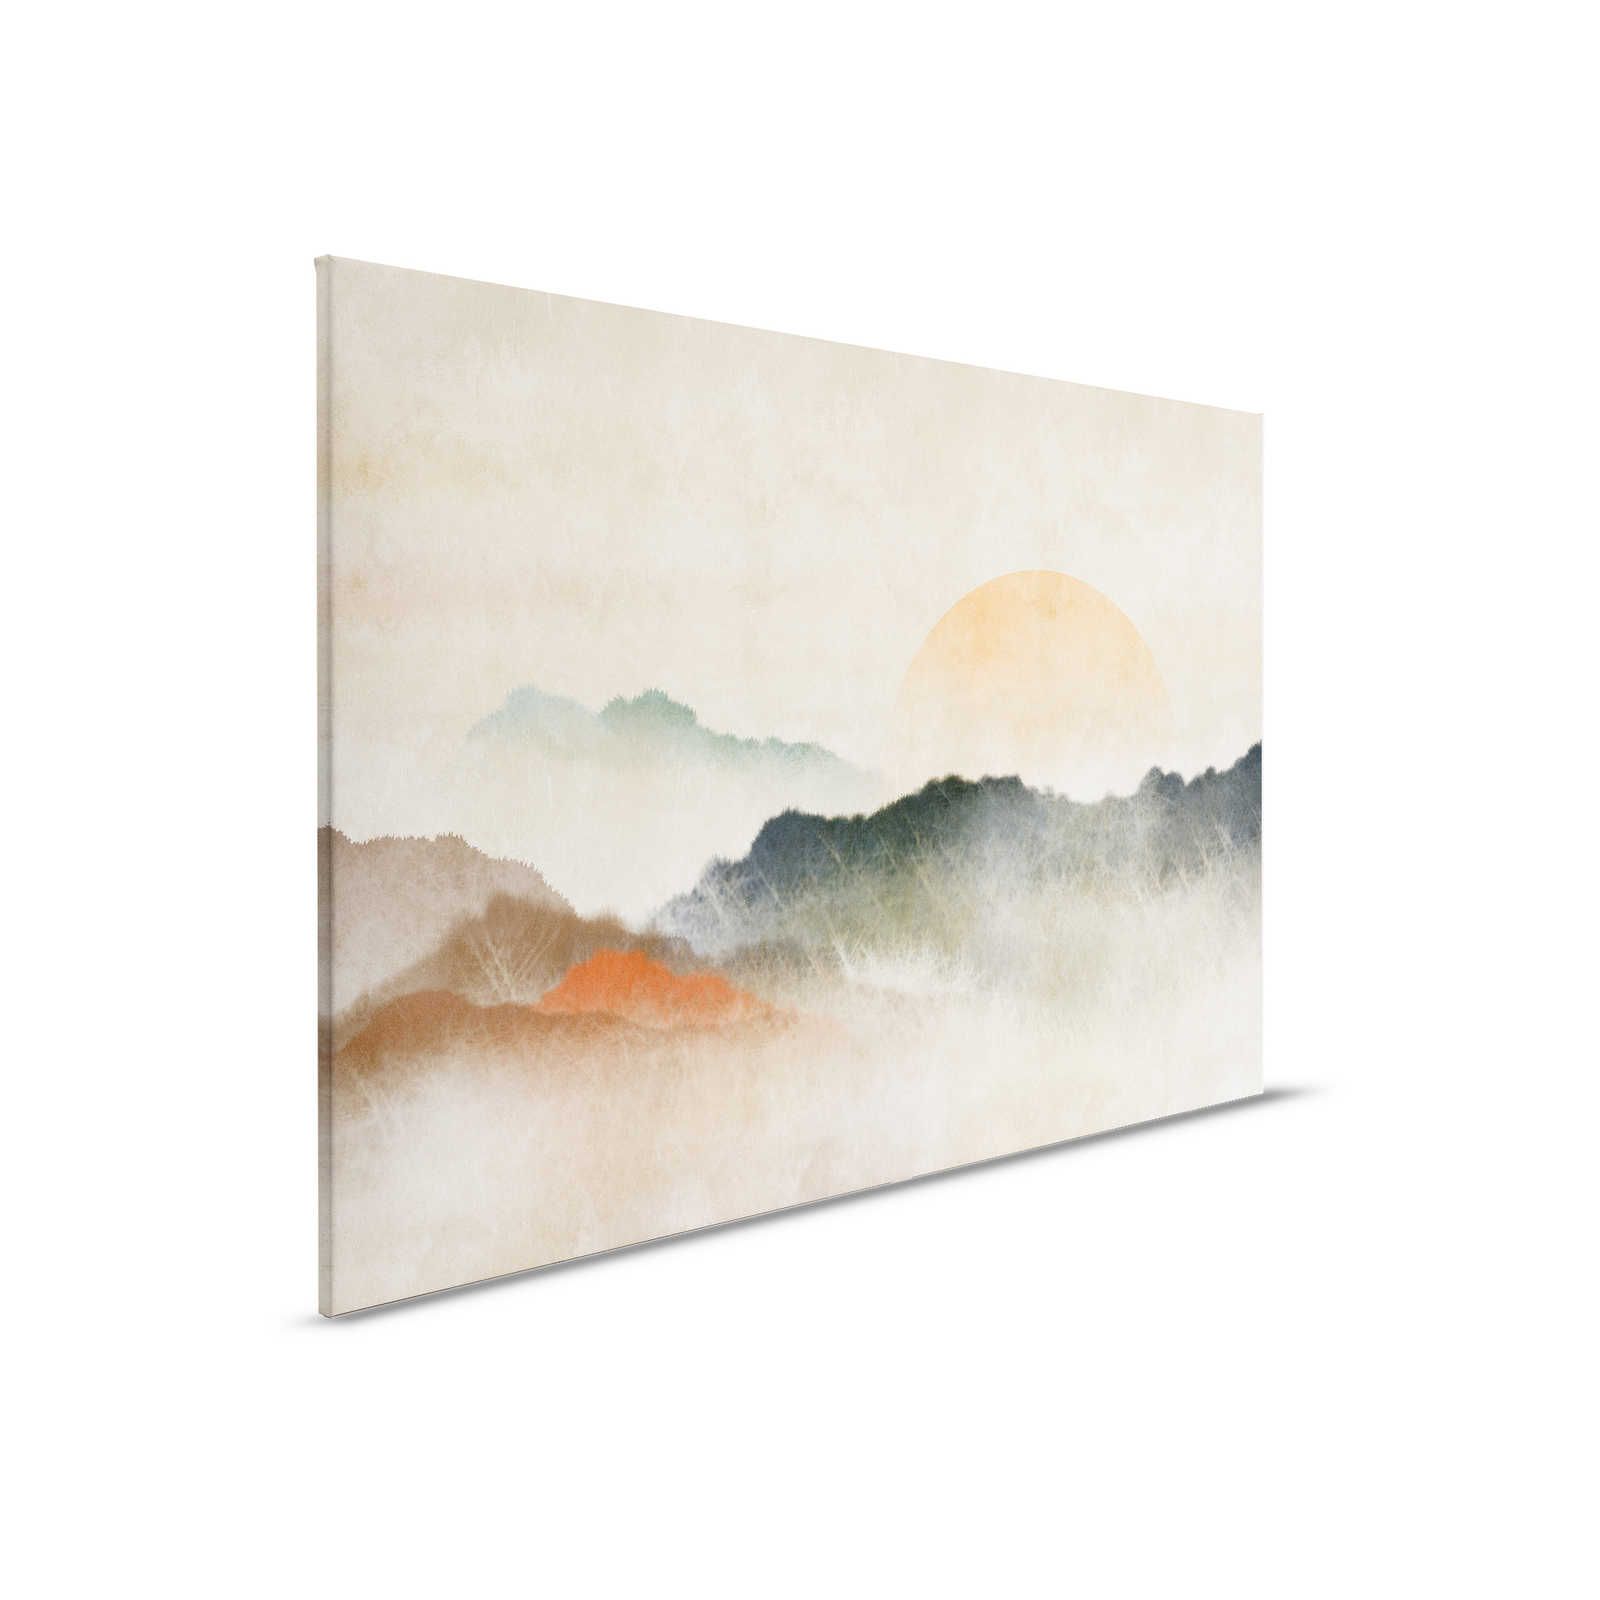         Akaishi 3 - Canvas painting Sunrise, Asia Style Art Print - 0.90 m x 0.60 m
    